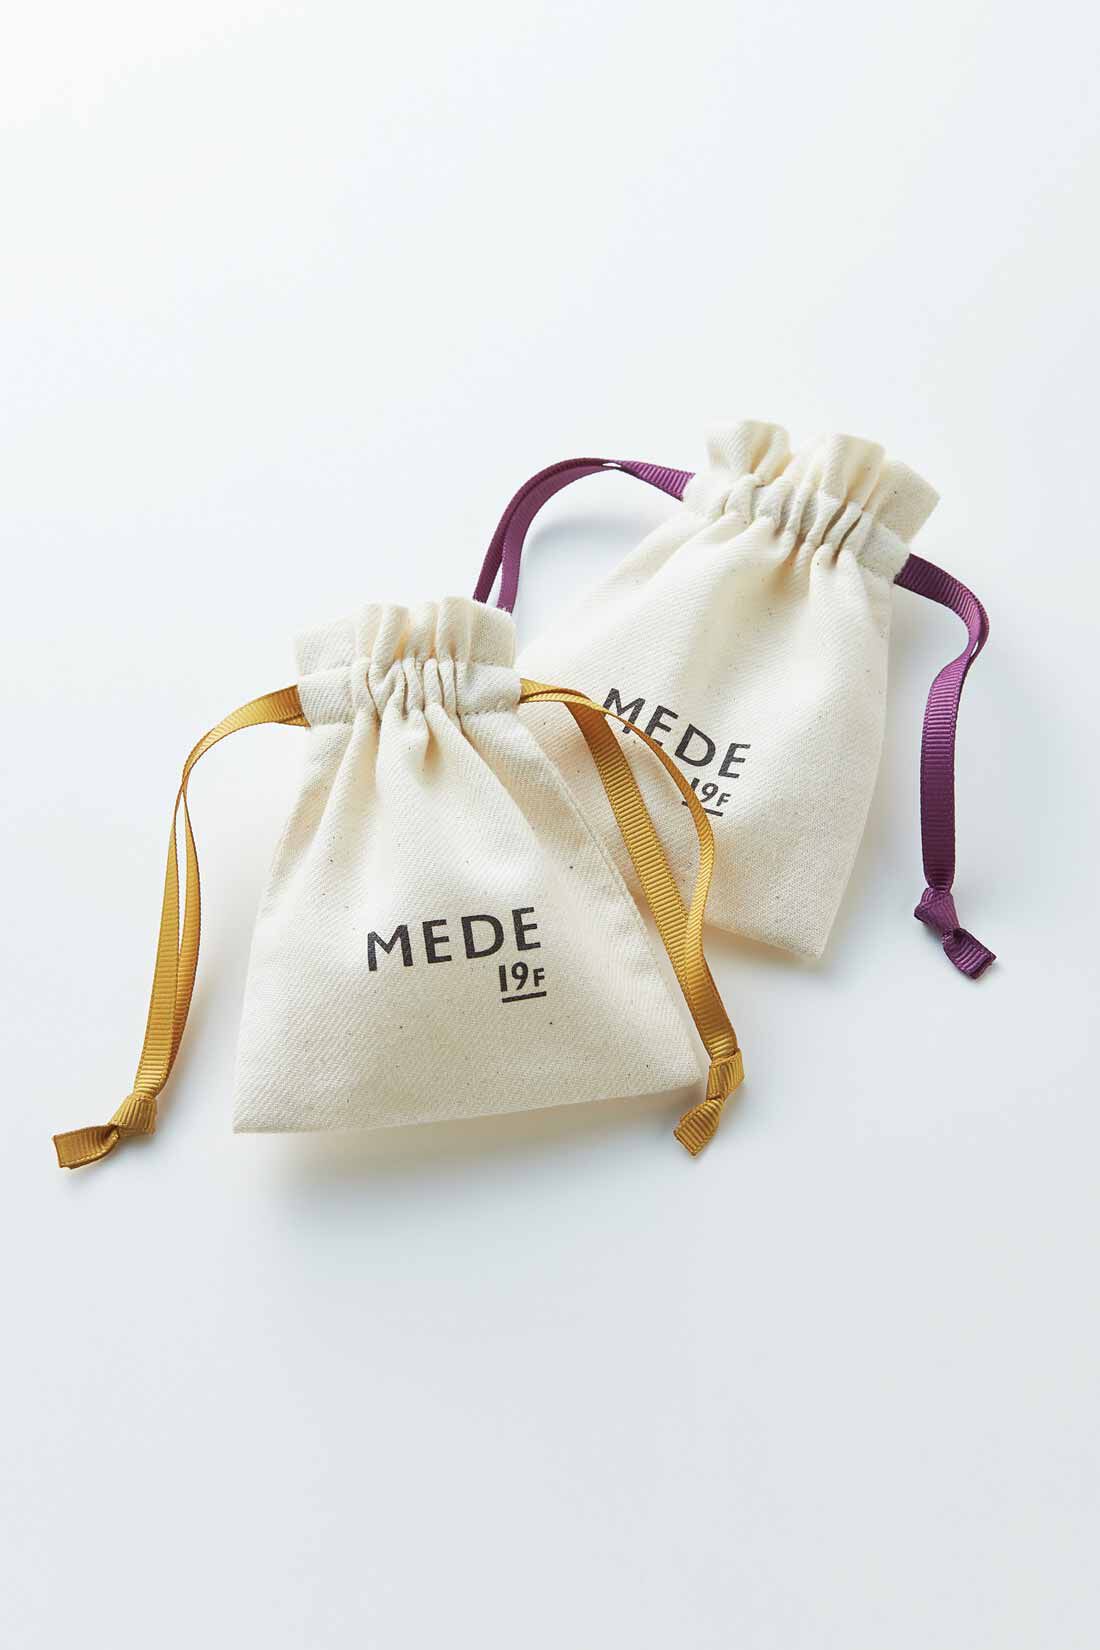 MEDE19F|YPAC for MEDE19F　フランス製陶器ボタンイヤリング type.13|MEDE19Fオリジナルきんちゃくに入れてお届けします。